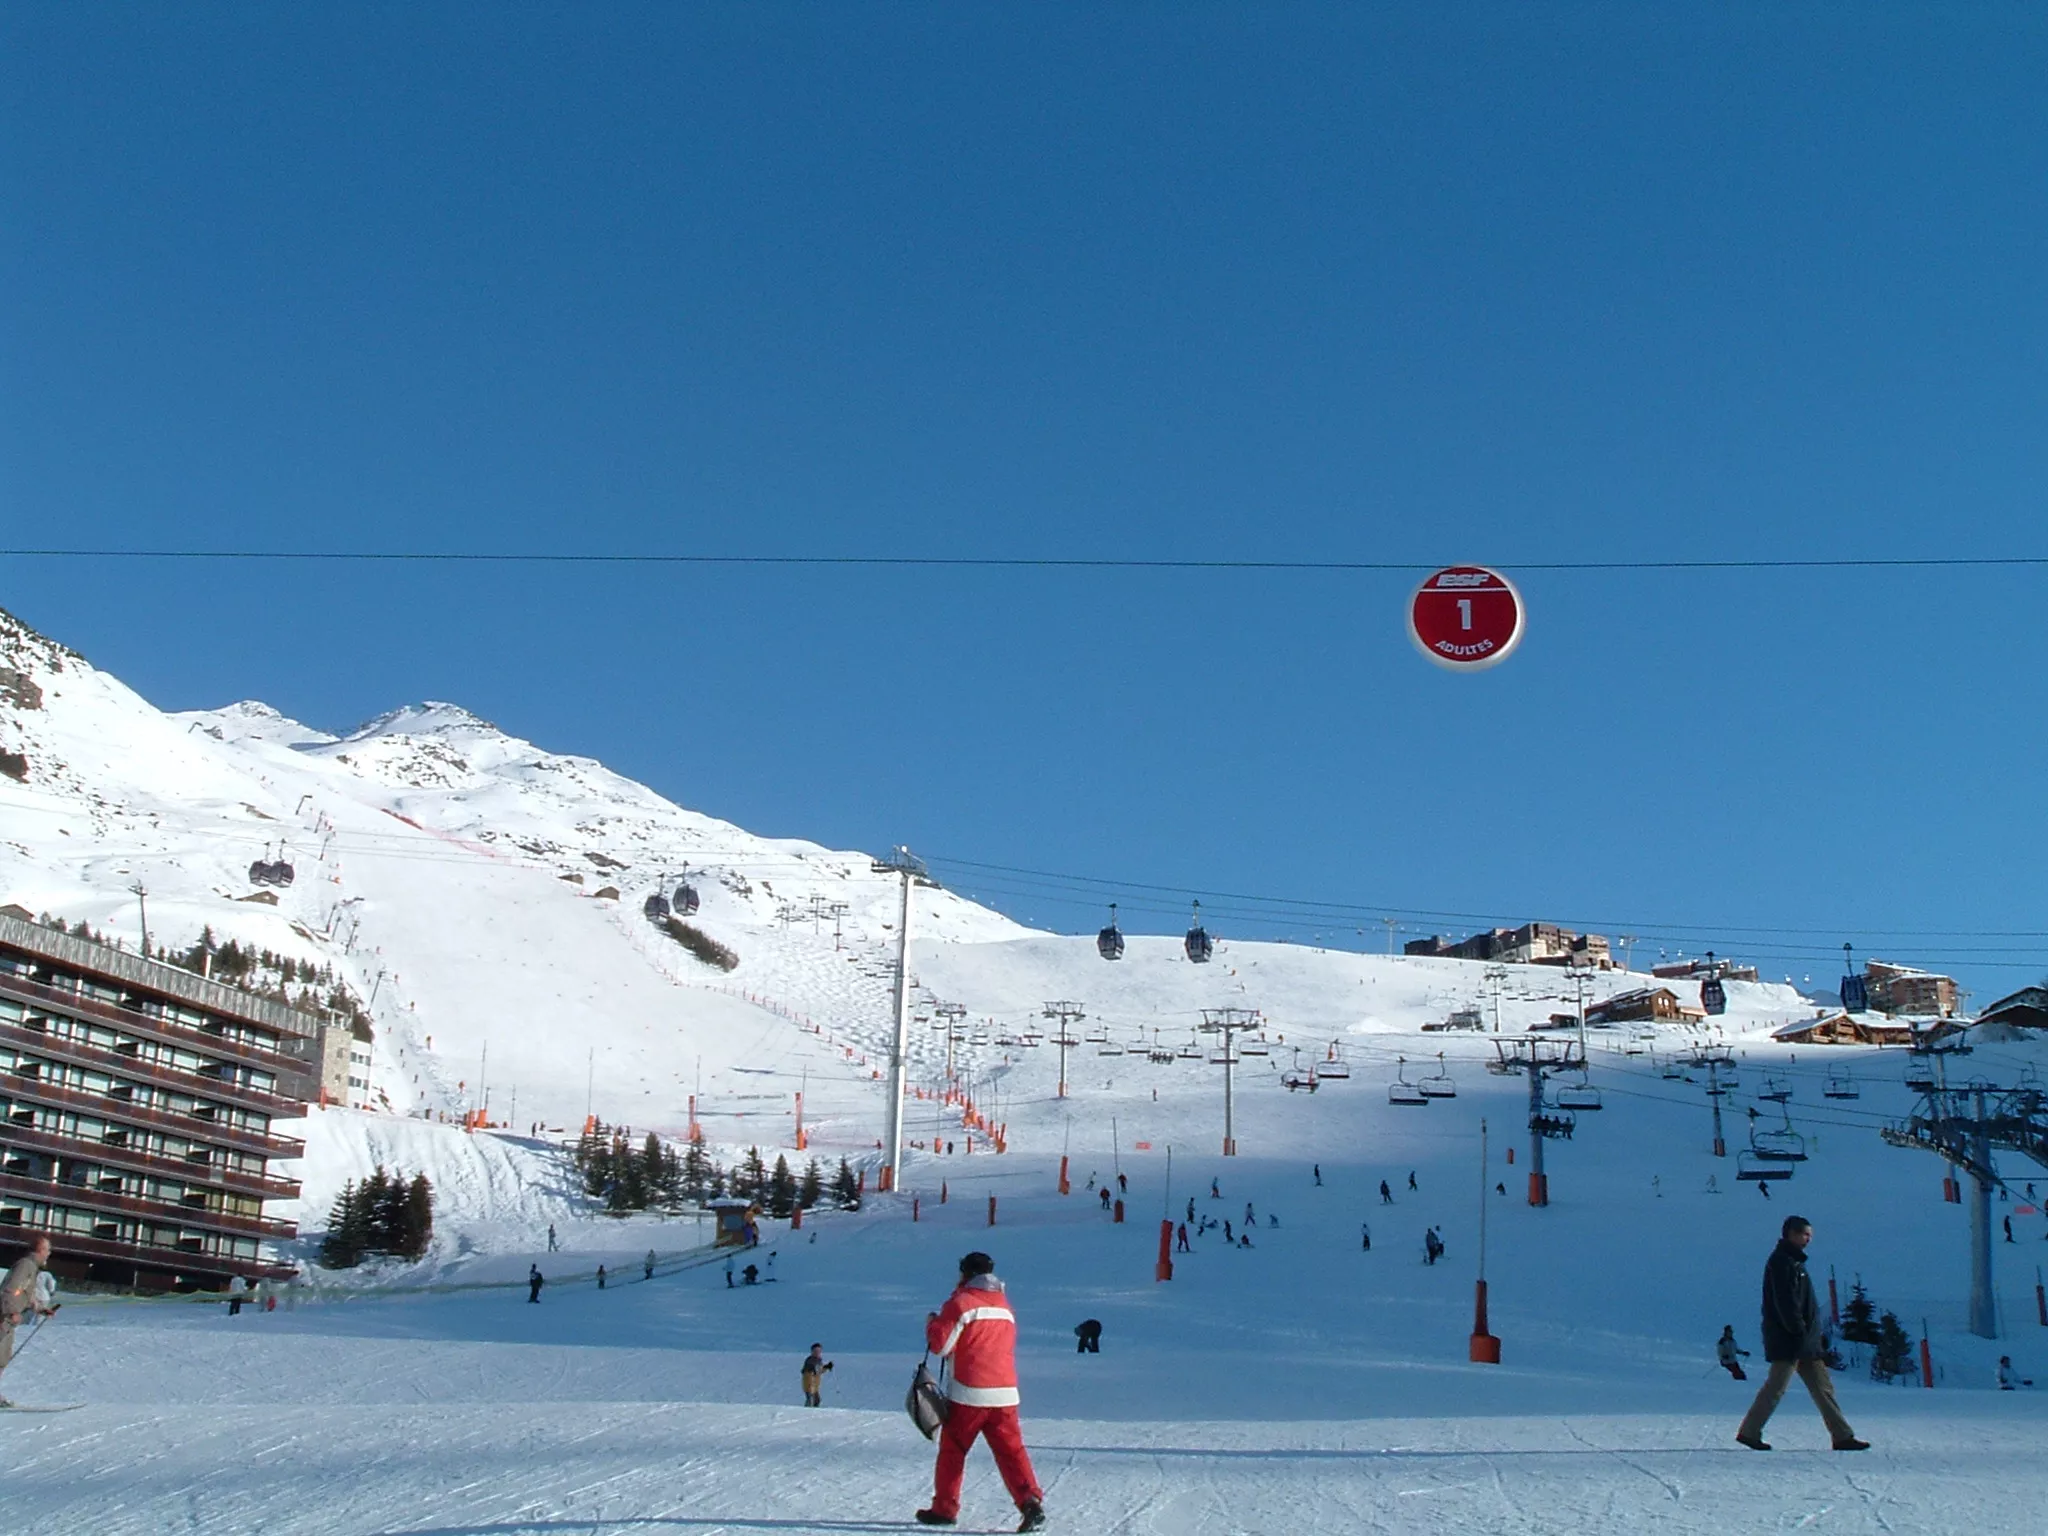 Les Menuires in France, Europe | Snowboarding,Skiing,Skating - Rated 7